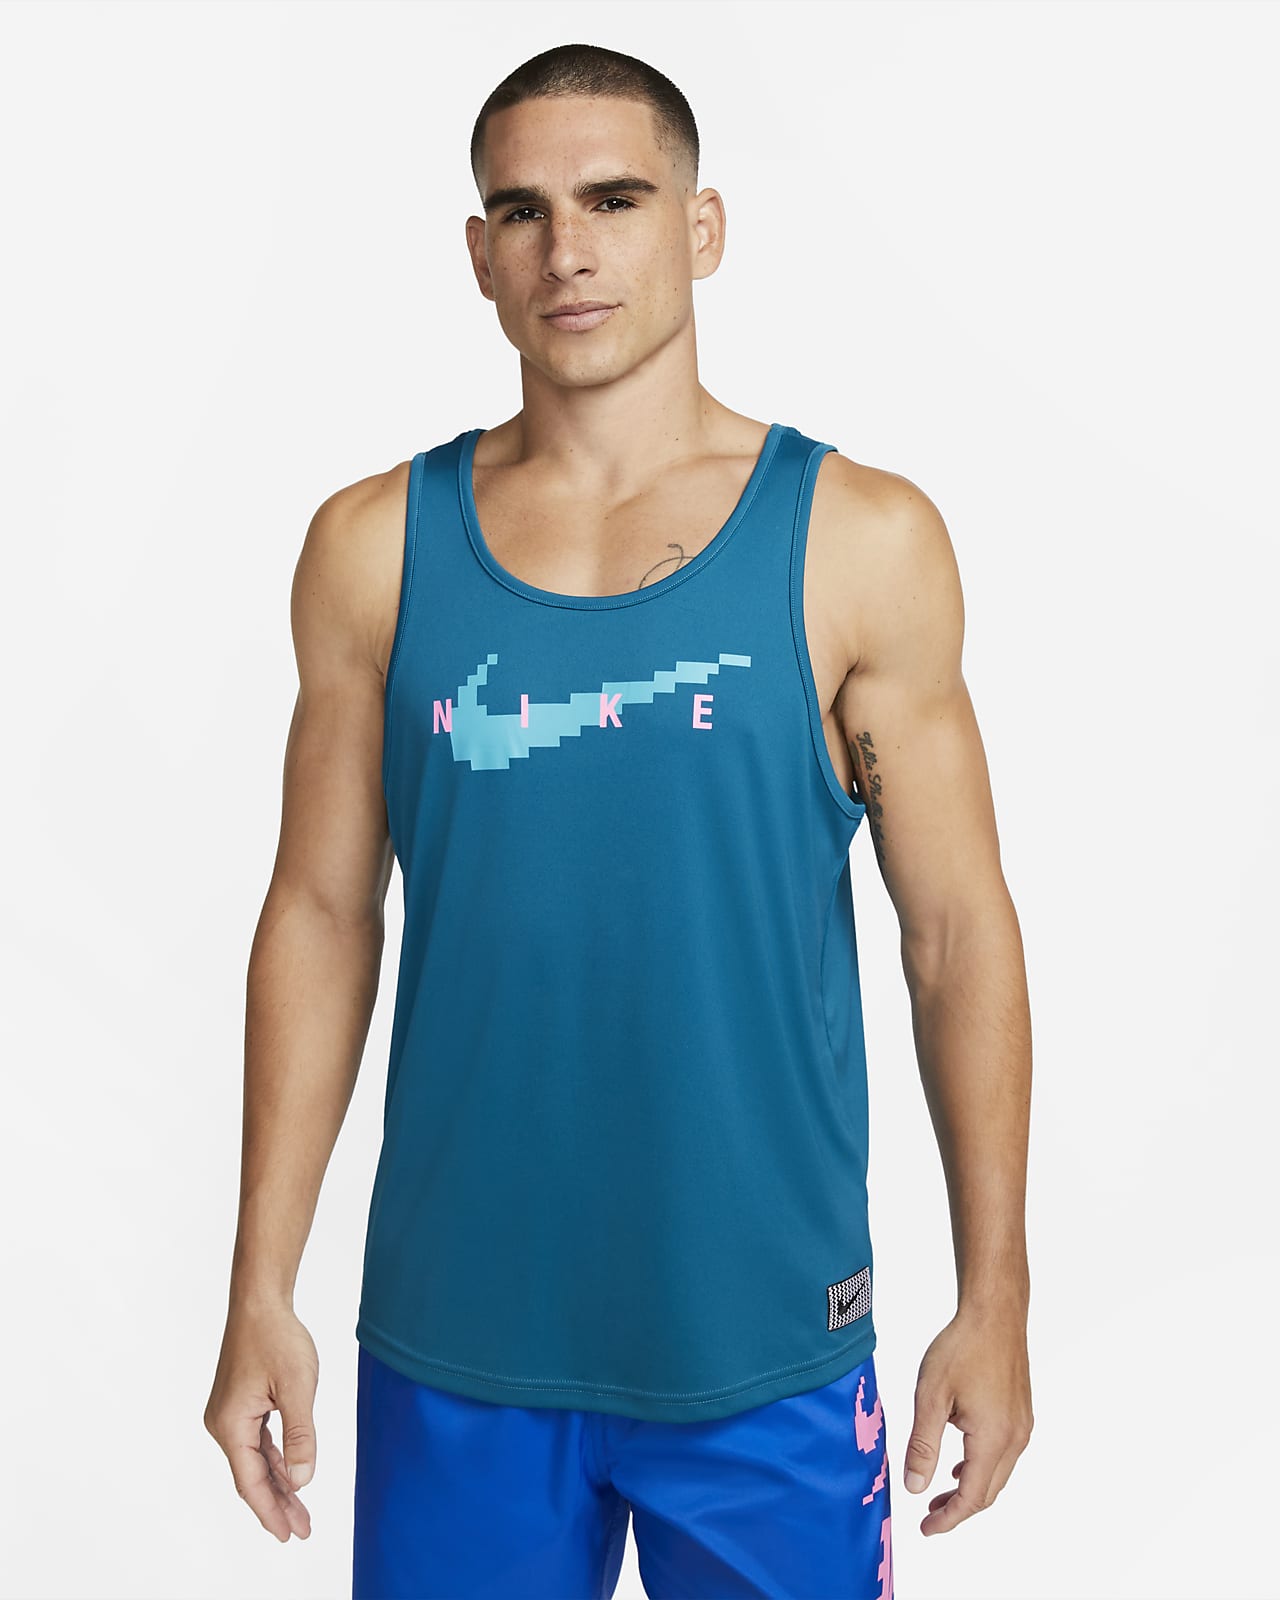 Nike Men's Swim Tank Top